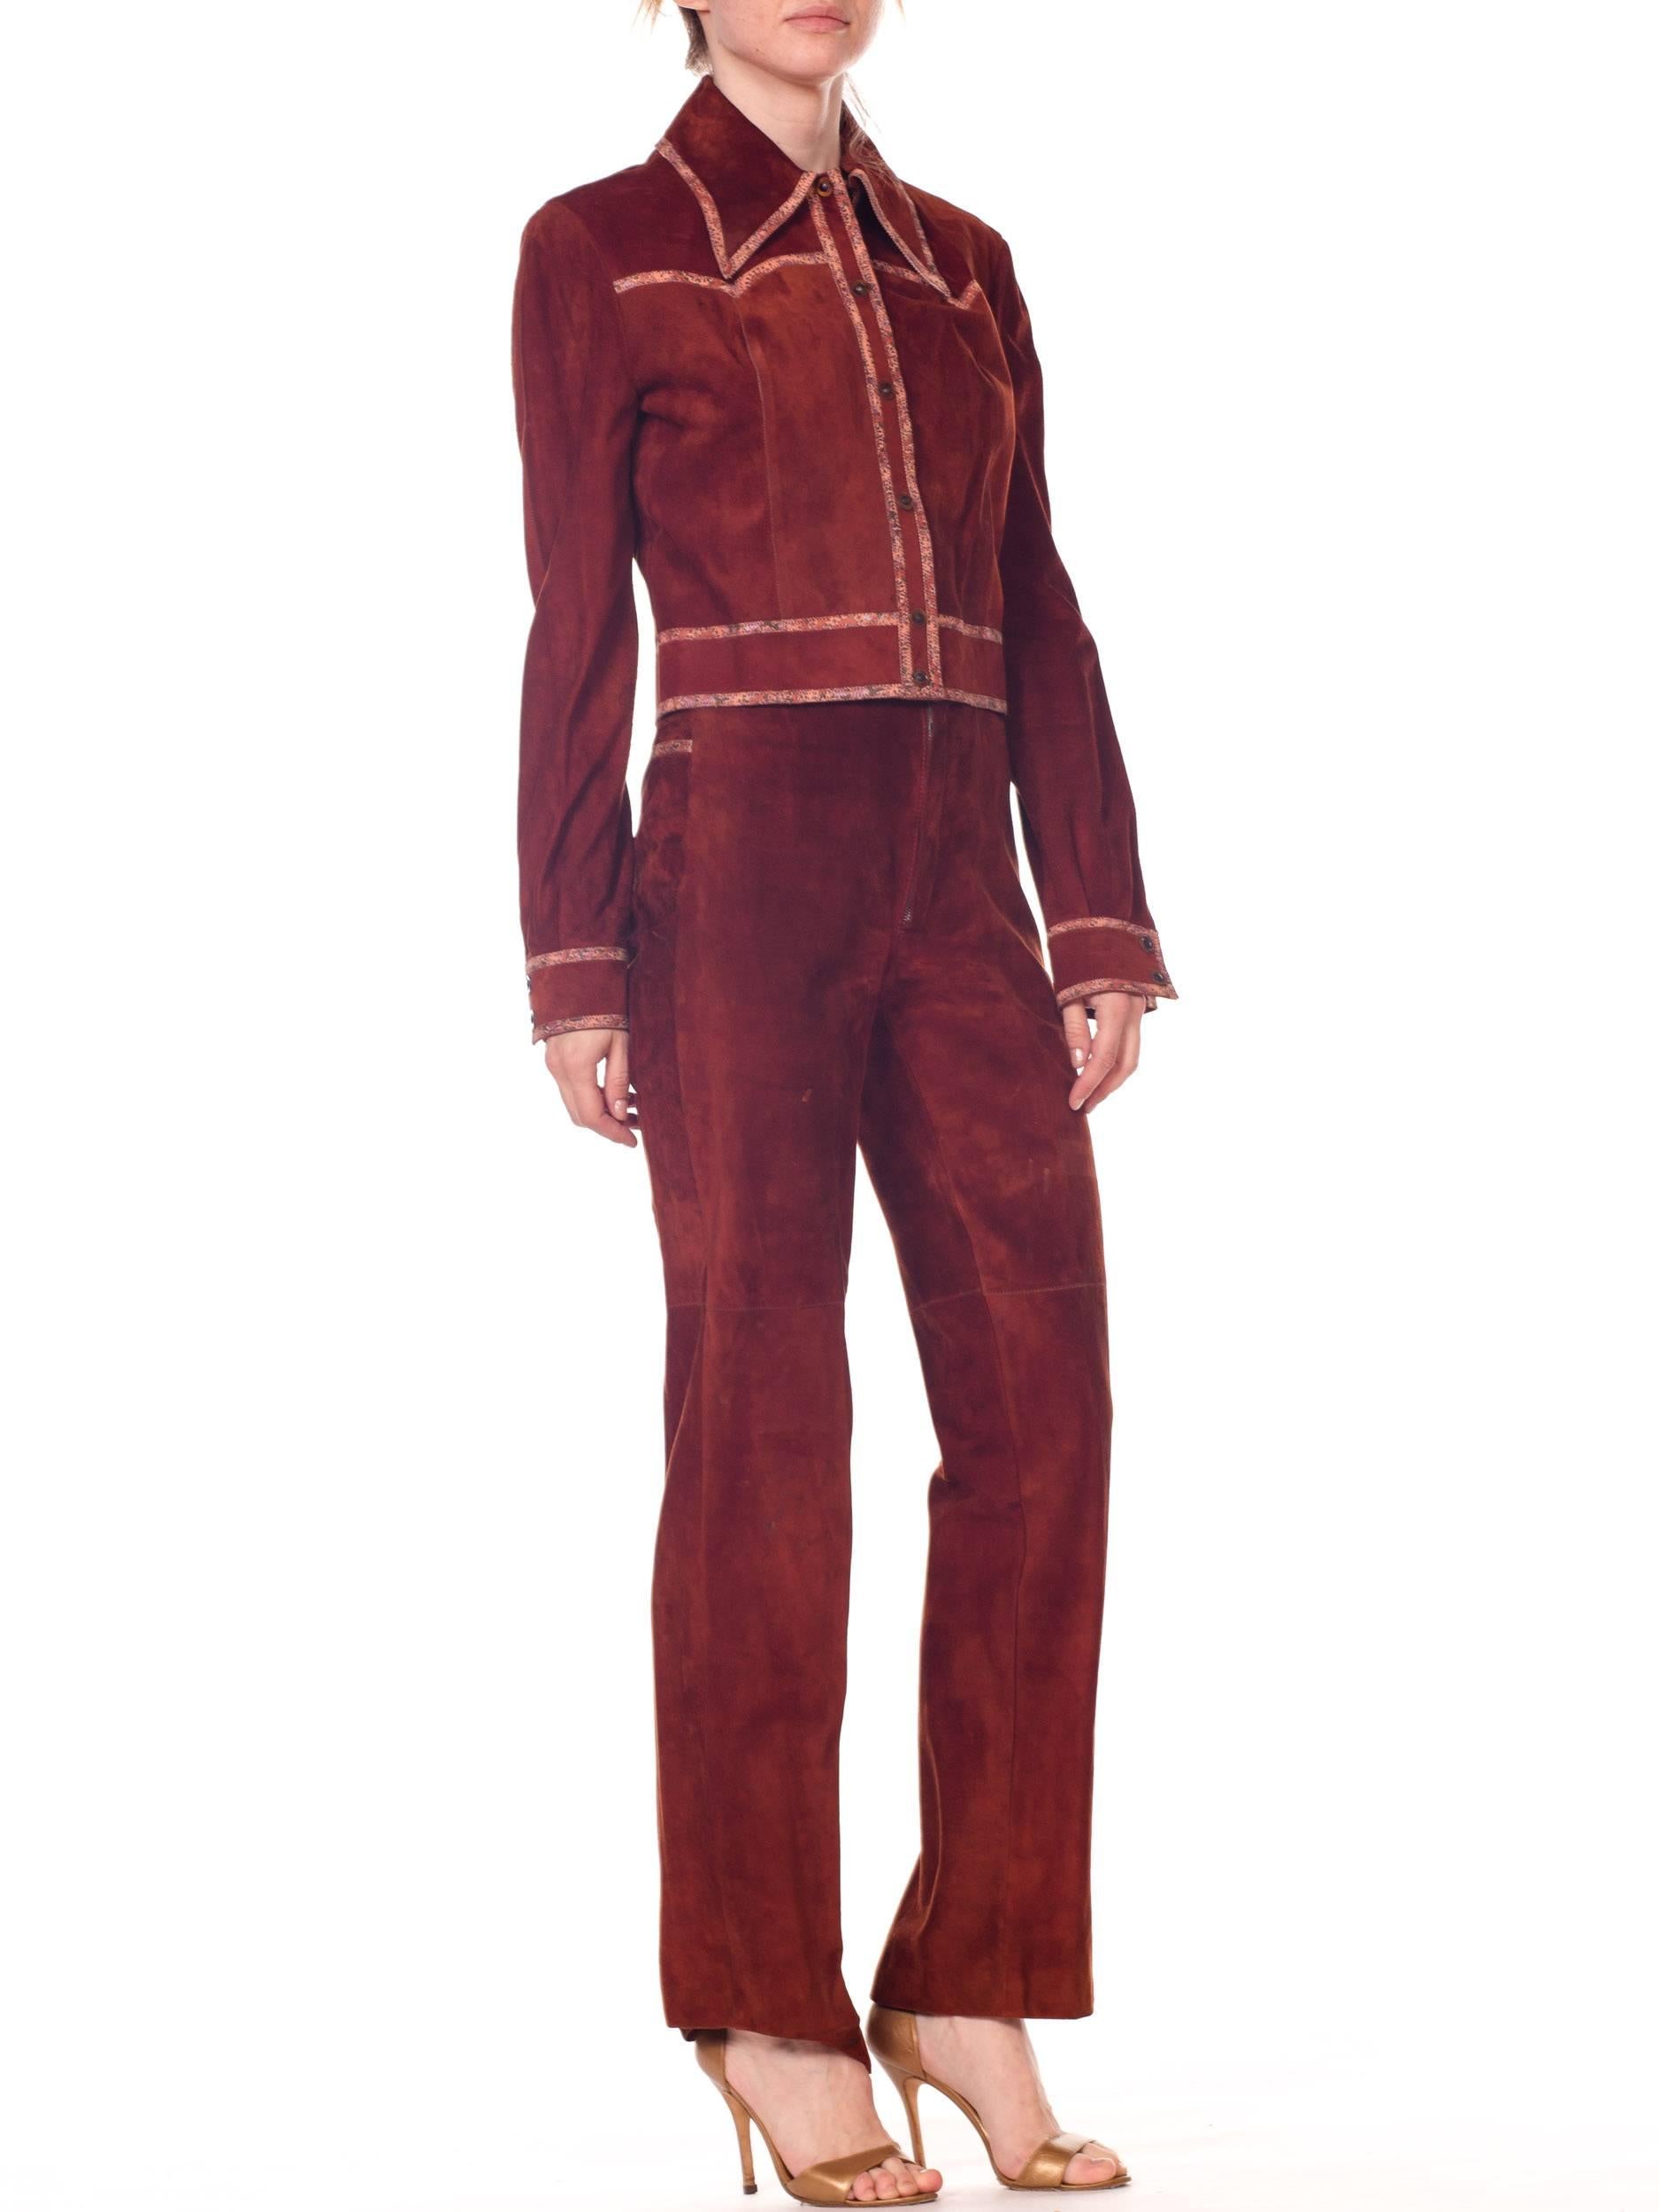 Brown Roberto Cavalli Cognac Suede Pants and Jacket set with printed trims